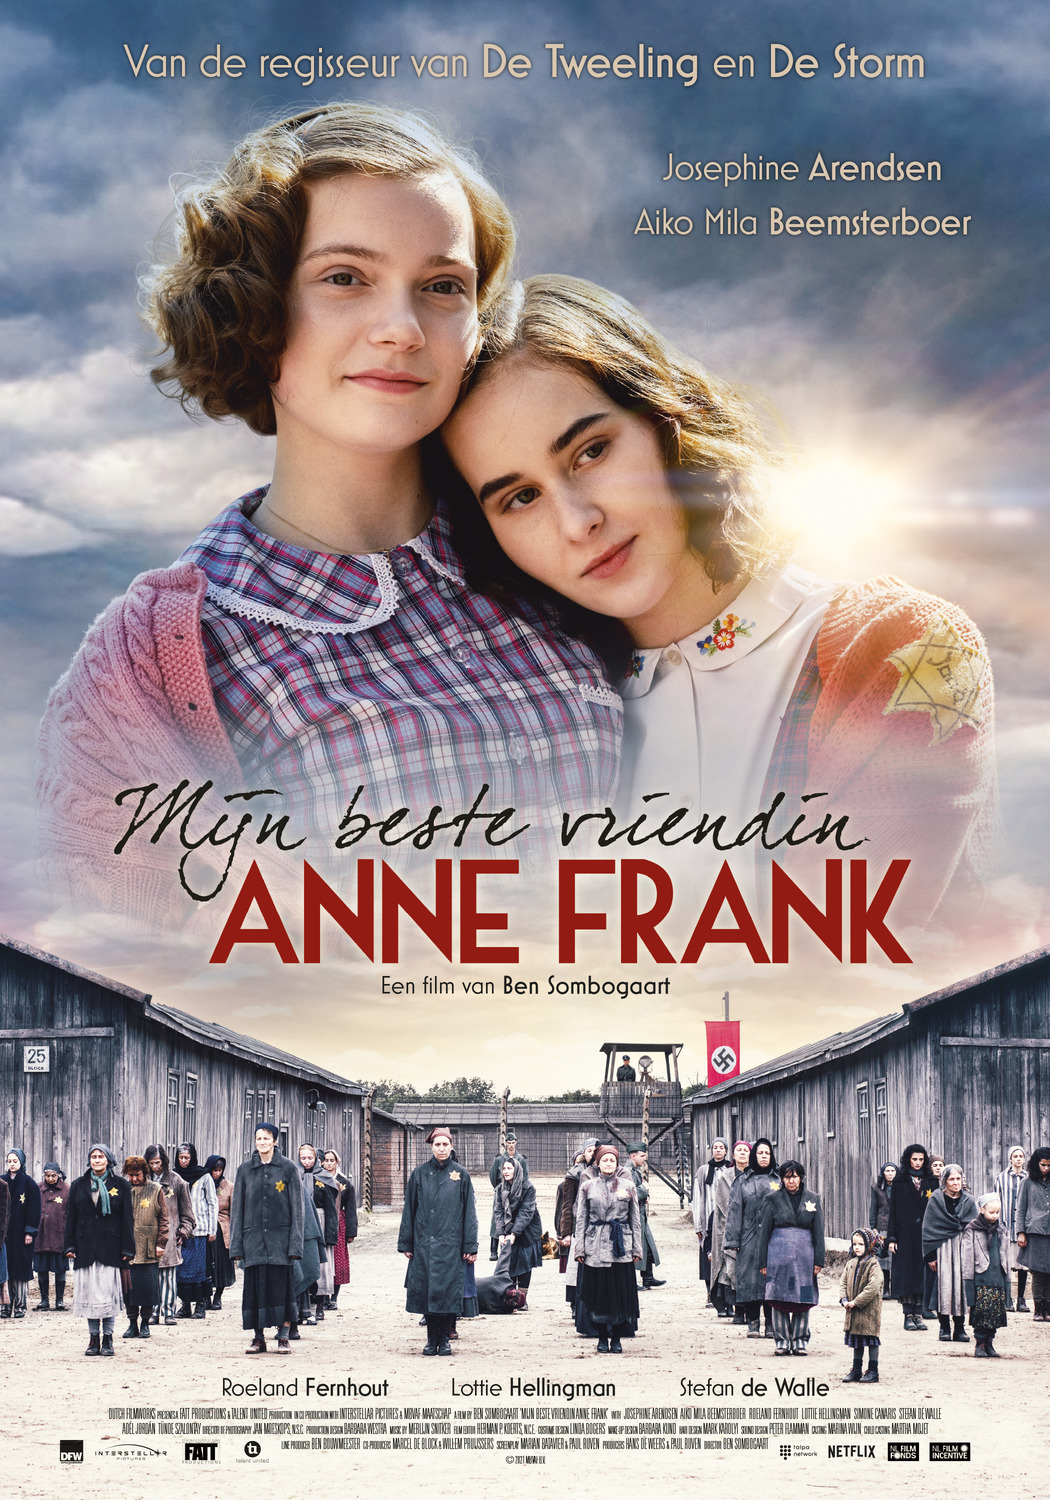 Extra Large Movie Poster Image for Mijn beste vriendin Anne Frank 